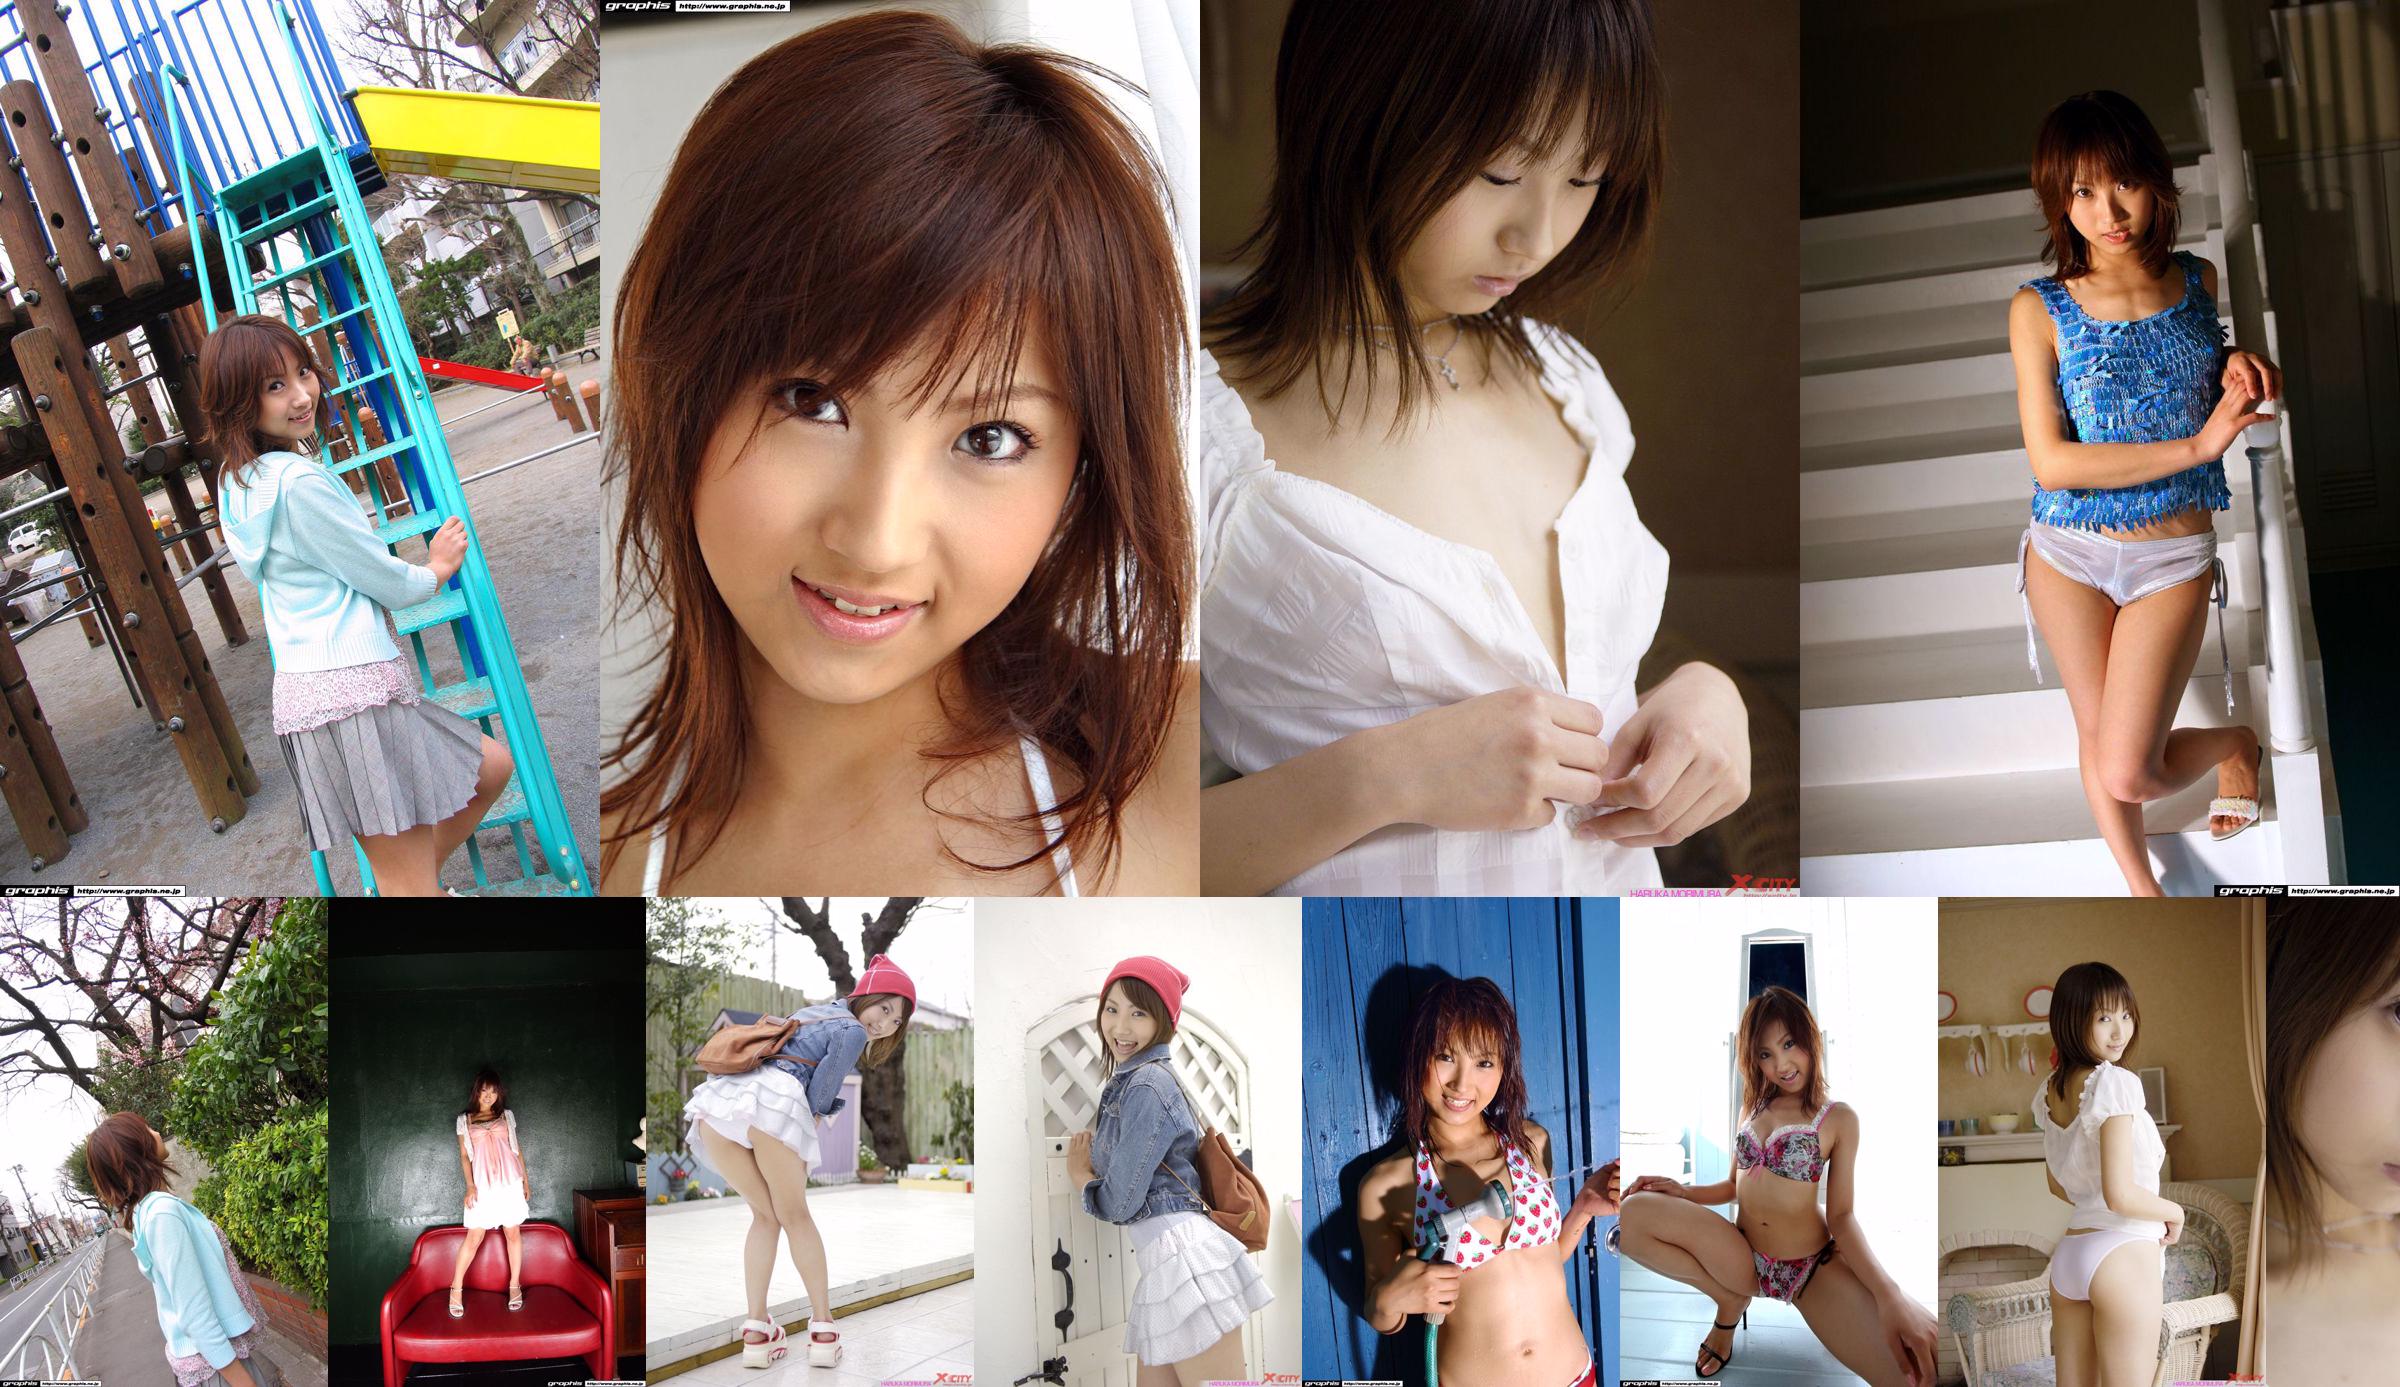 [X-City] WEB No.012 Haruka Morimura / Morimura Haruka "Morning Girl" No.6da2ca Page 2